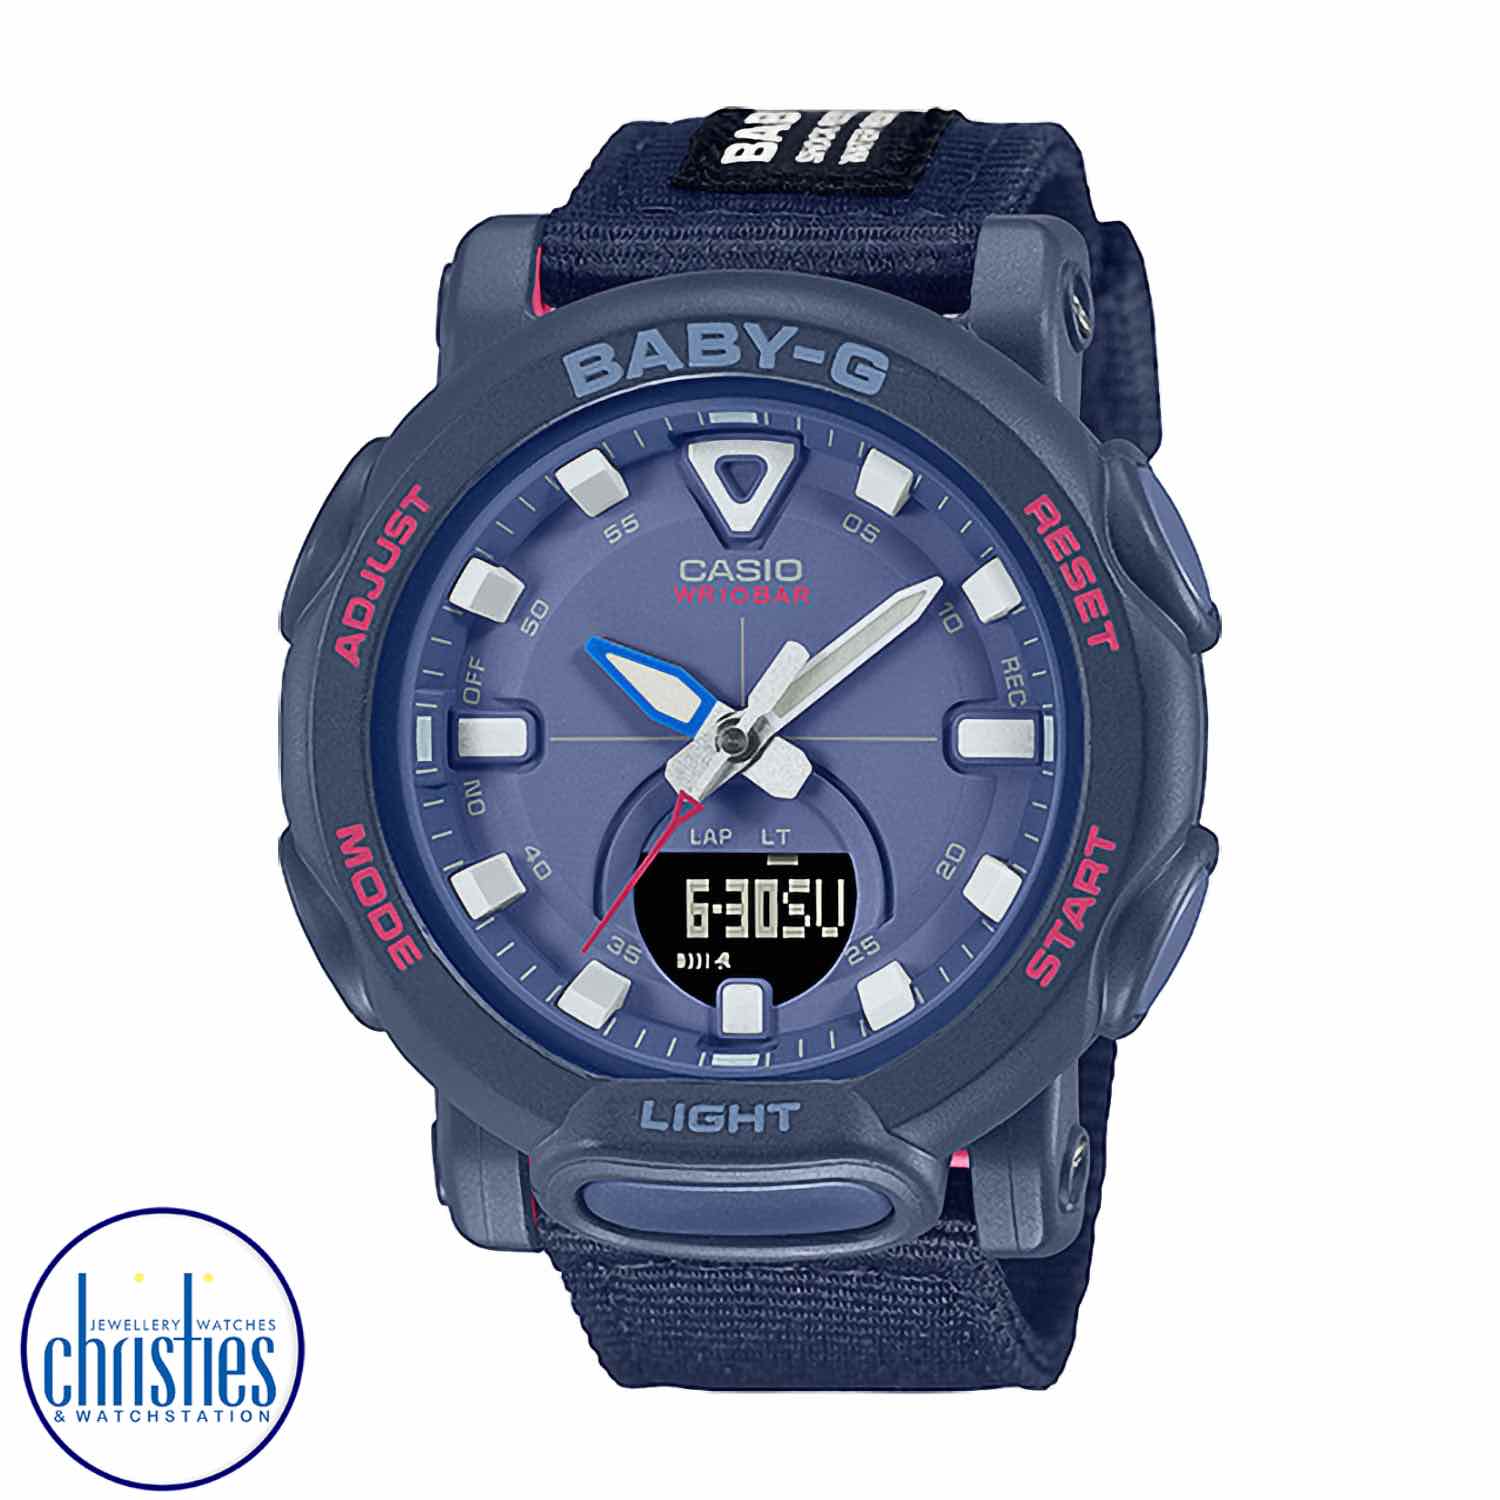 BGA310C-2A Casio Baby-G Outdoor Watch buy baby-g watch nz